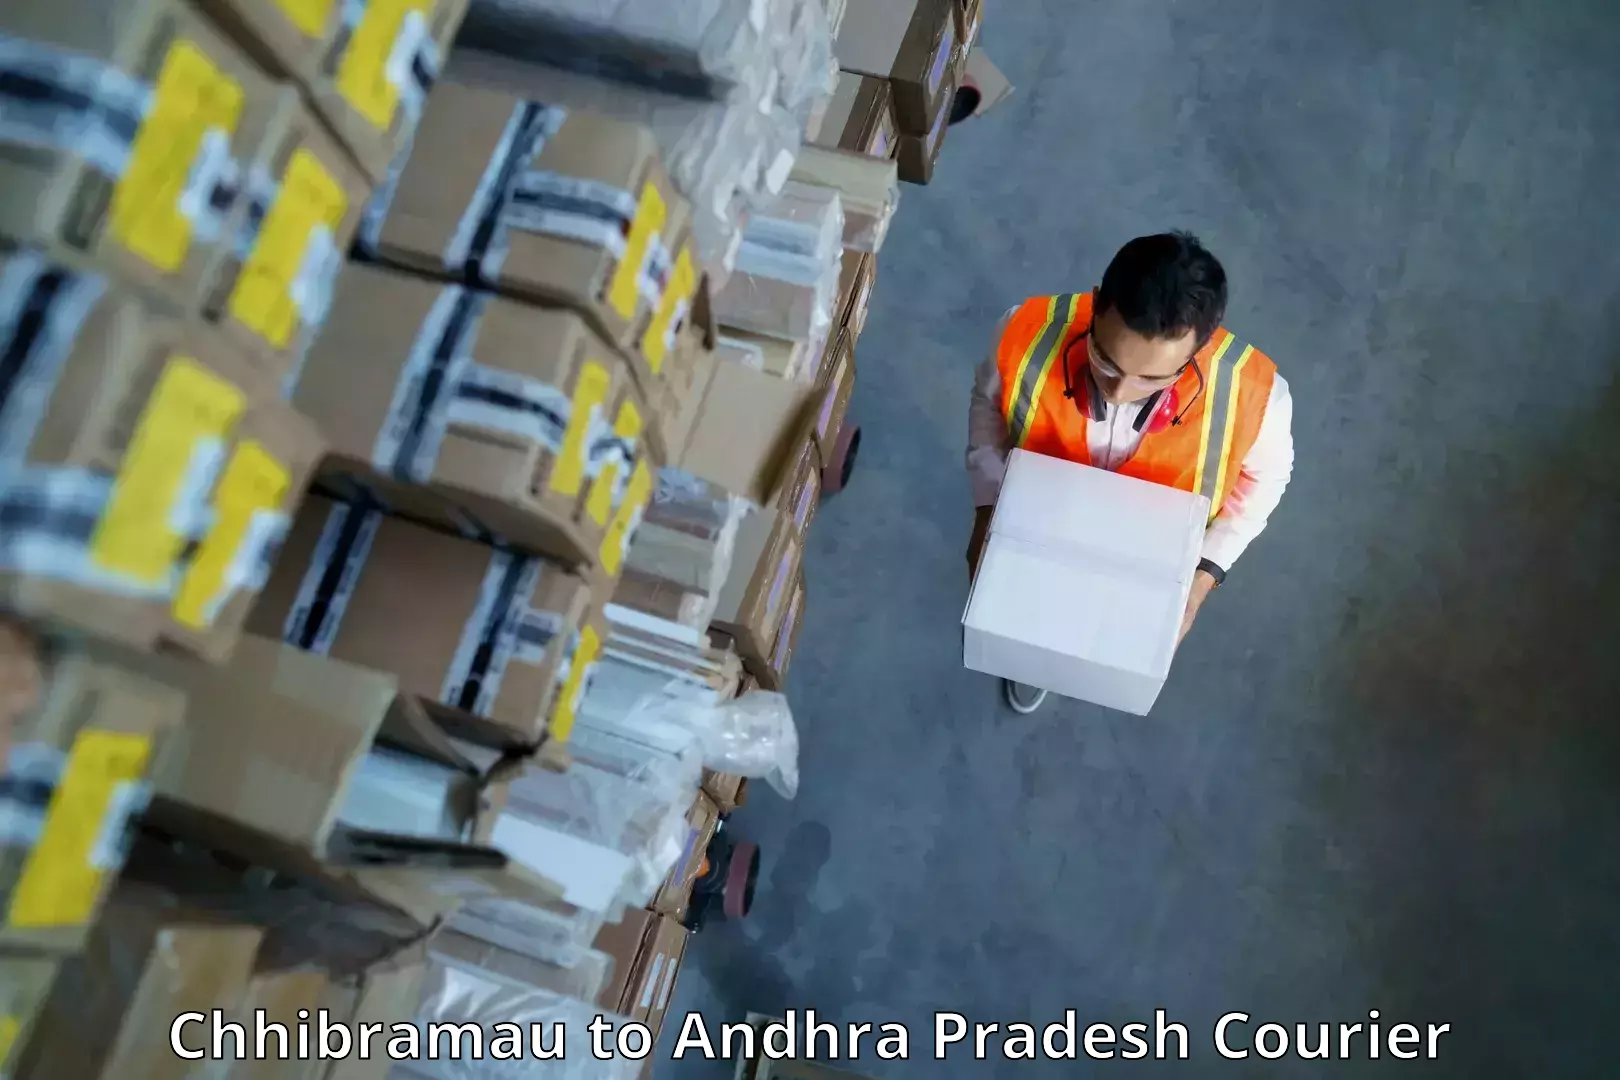 Professional courier handling Chhibramau to Bheemunipatnam